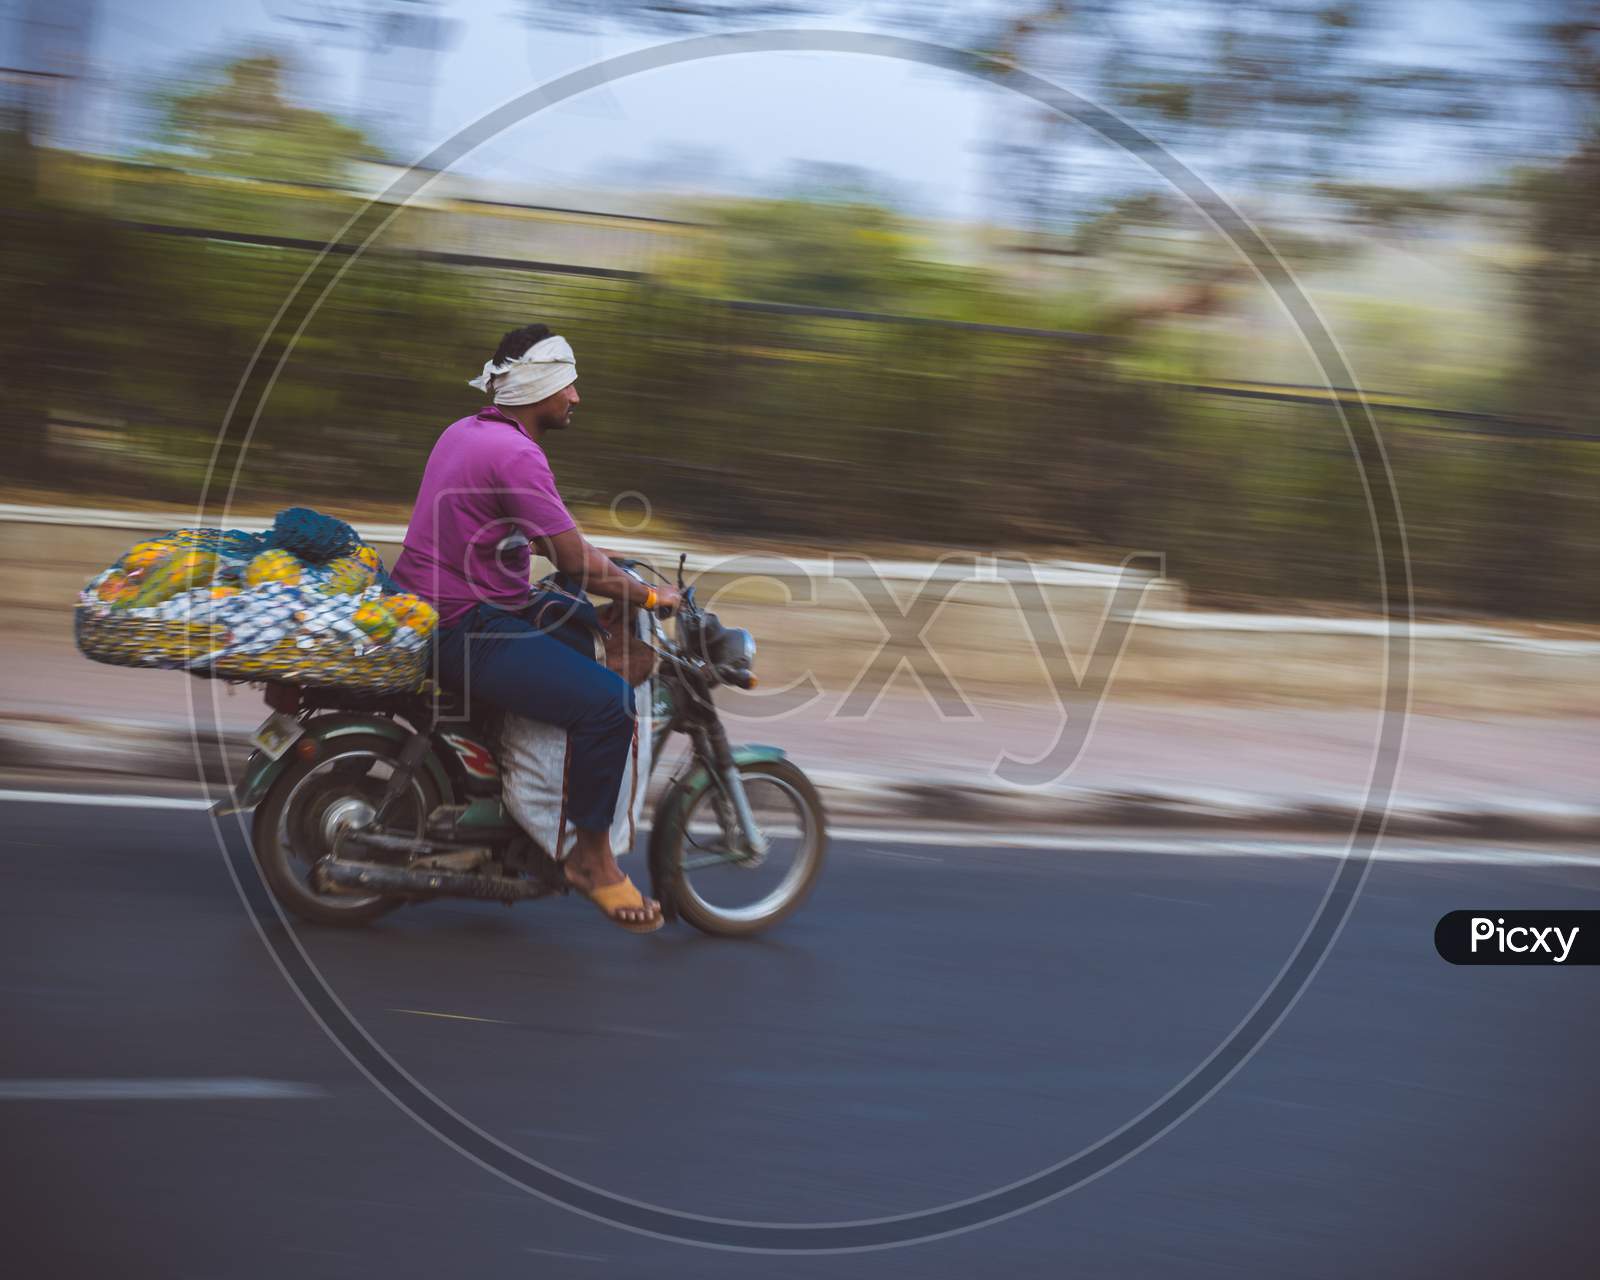 A Fruit Vendor On A Bike